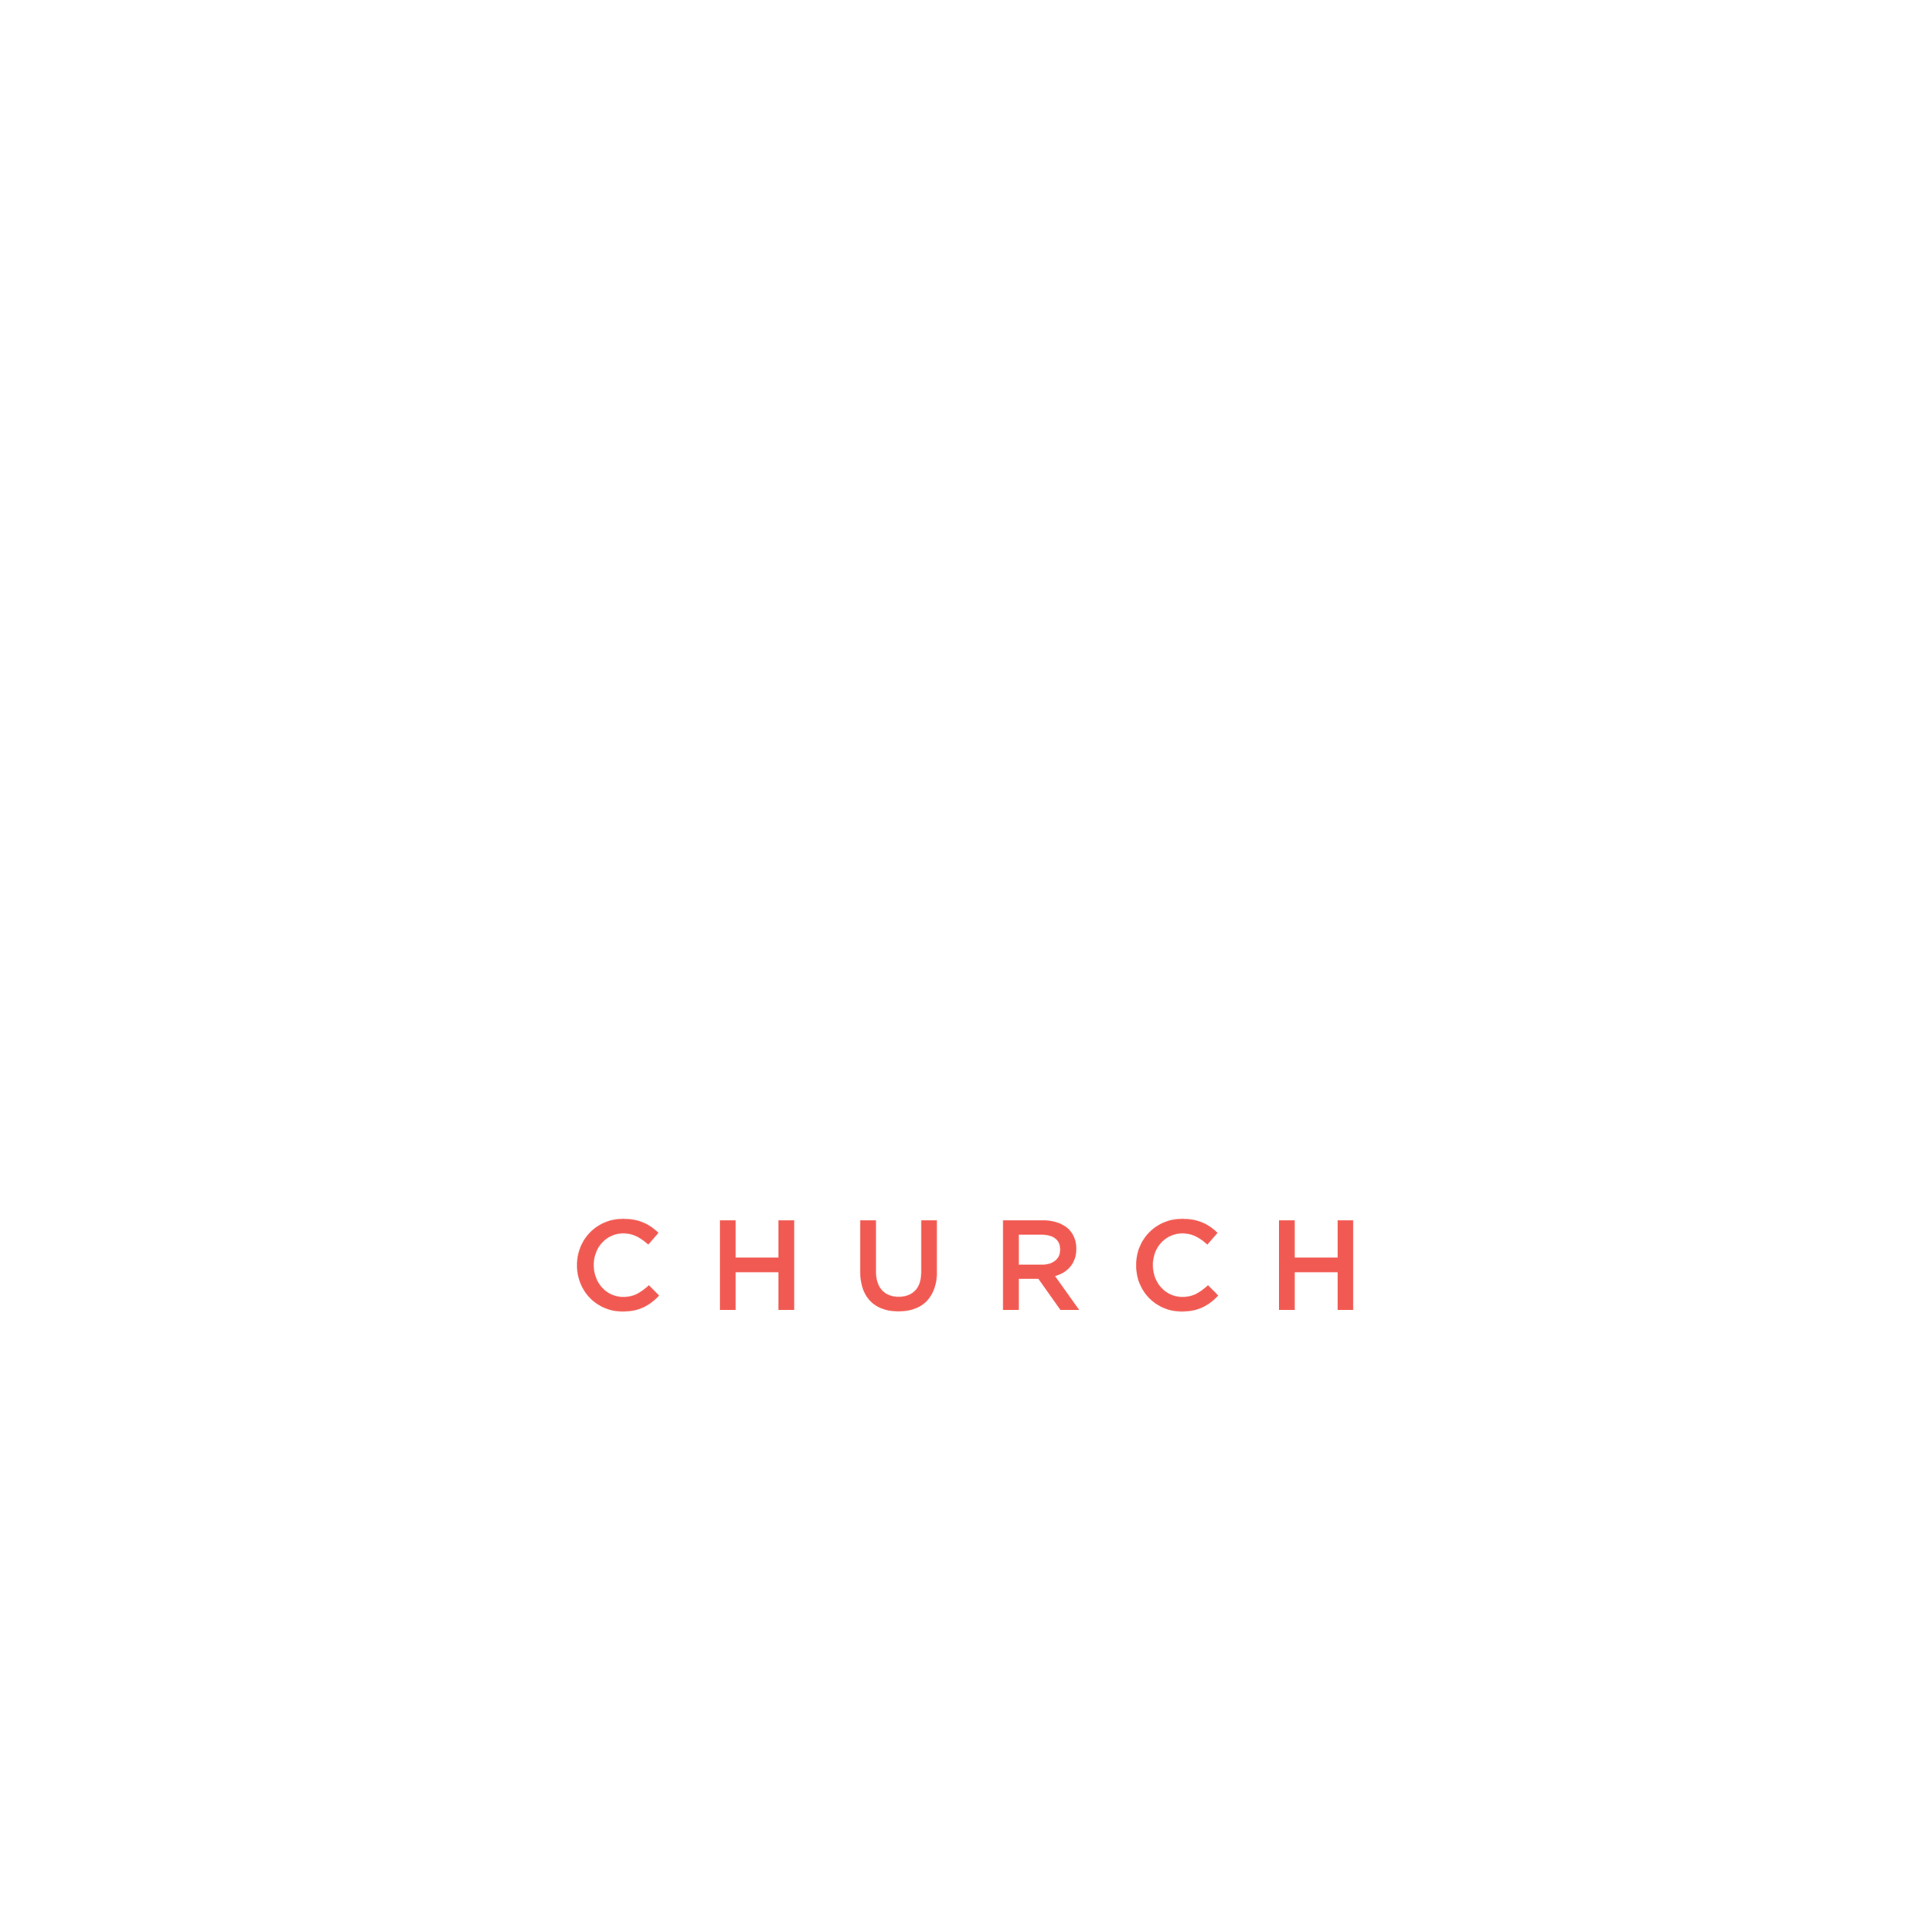 Cornerstone Church Long Beach